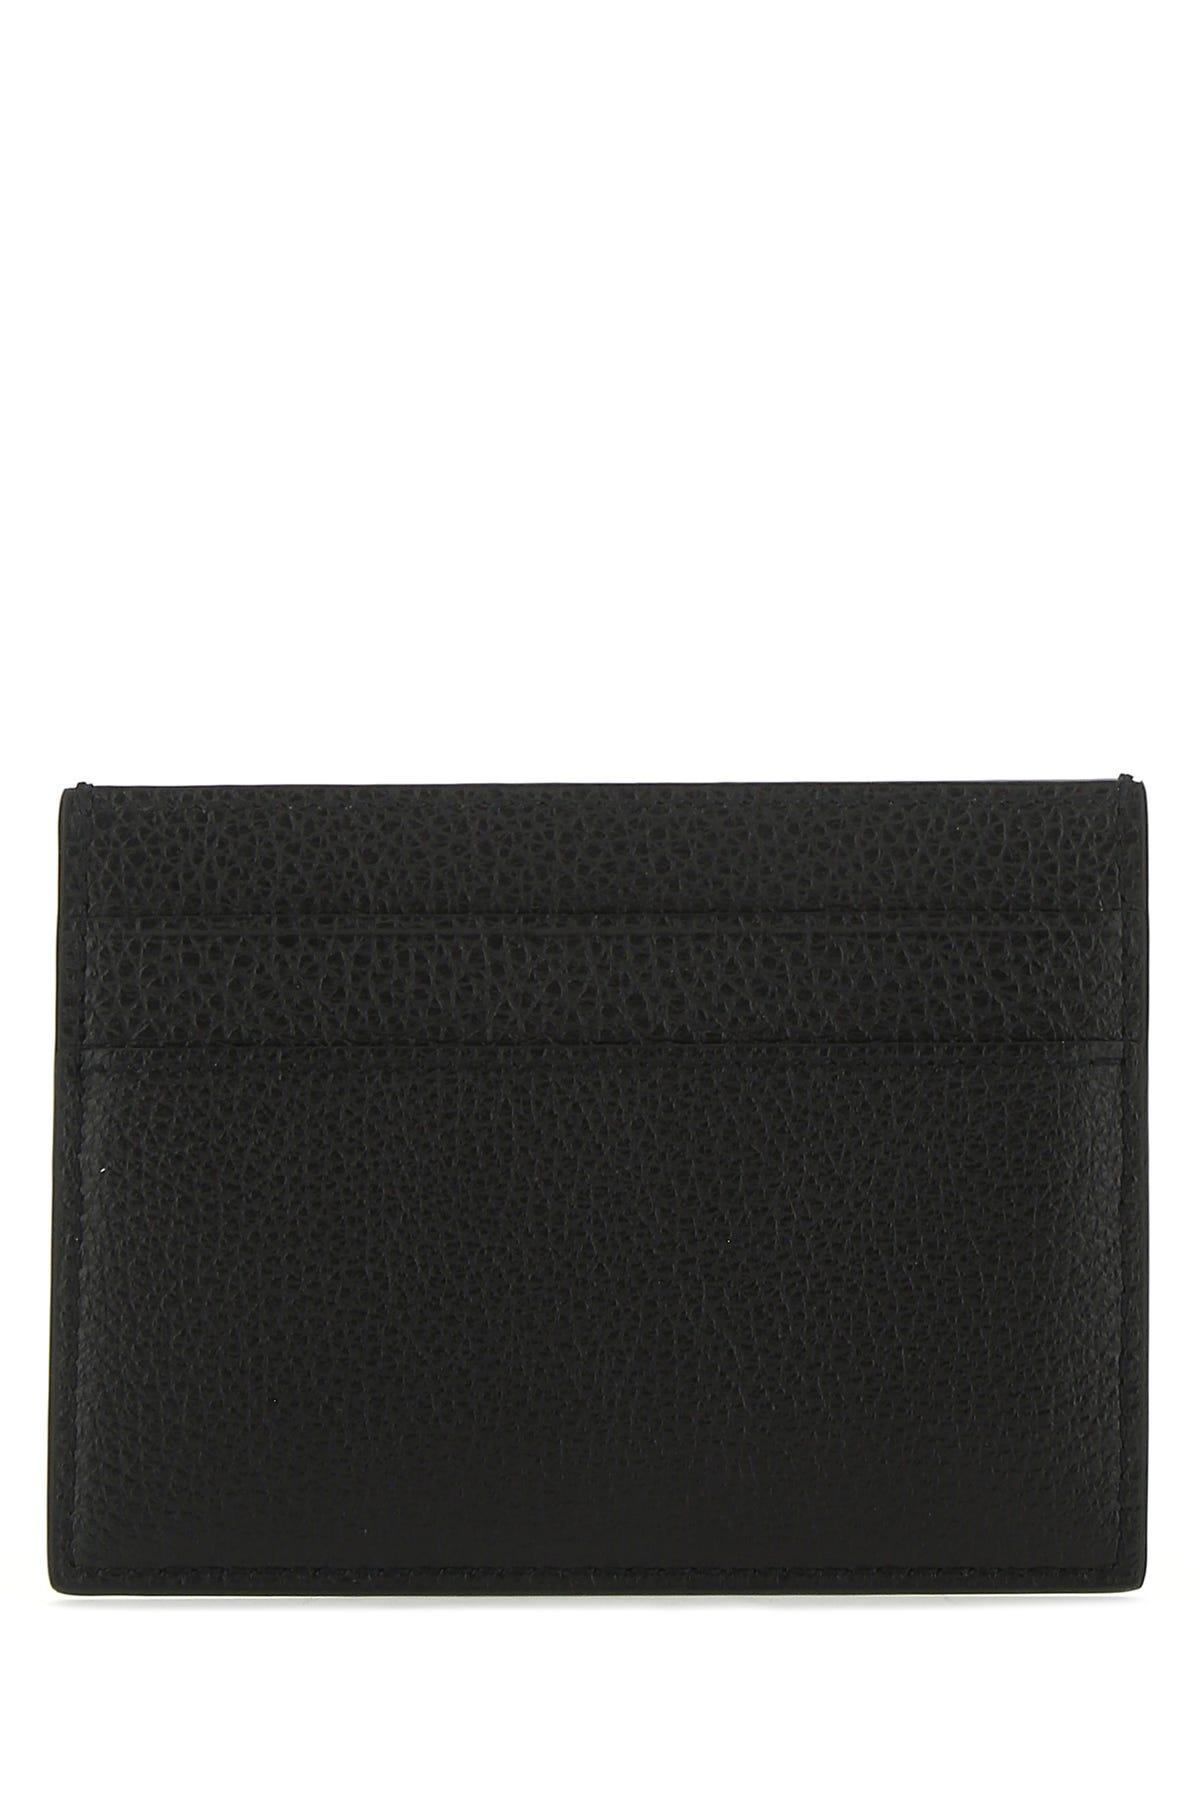 Balenciaga Black Leather Card Holder - Save 5% - Lyst